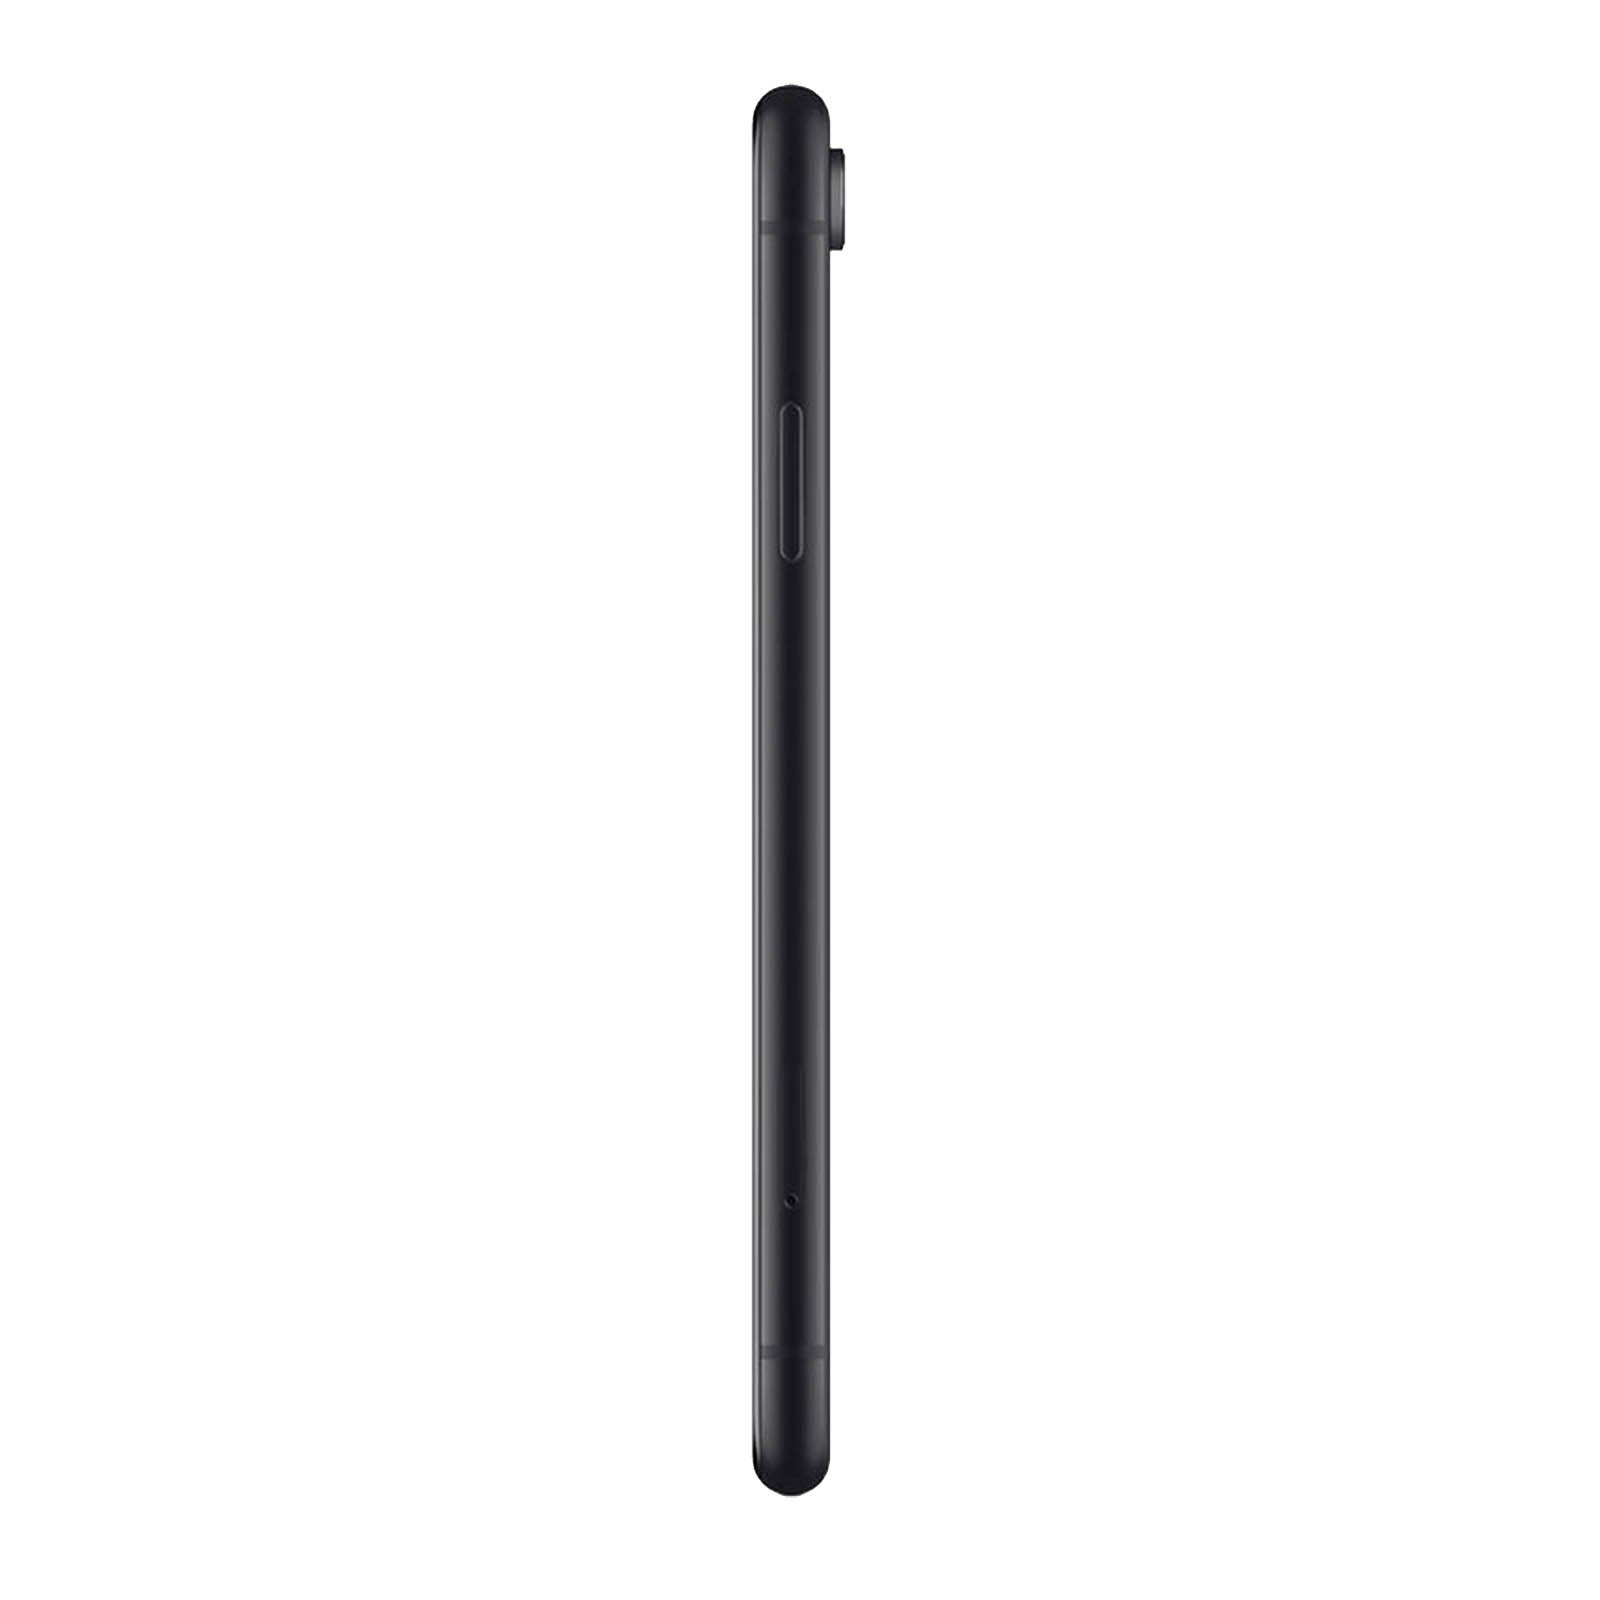 Apple iPhone XR 128GB Black Very Good - Unlocked